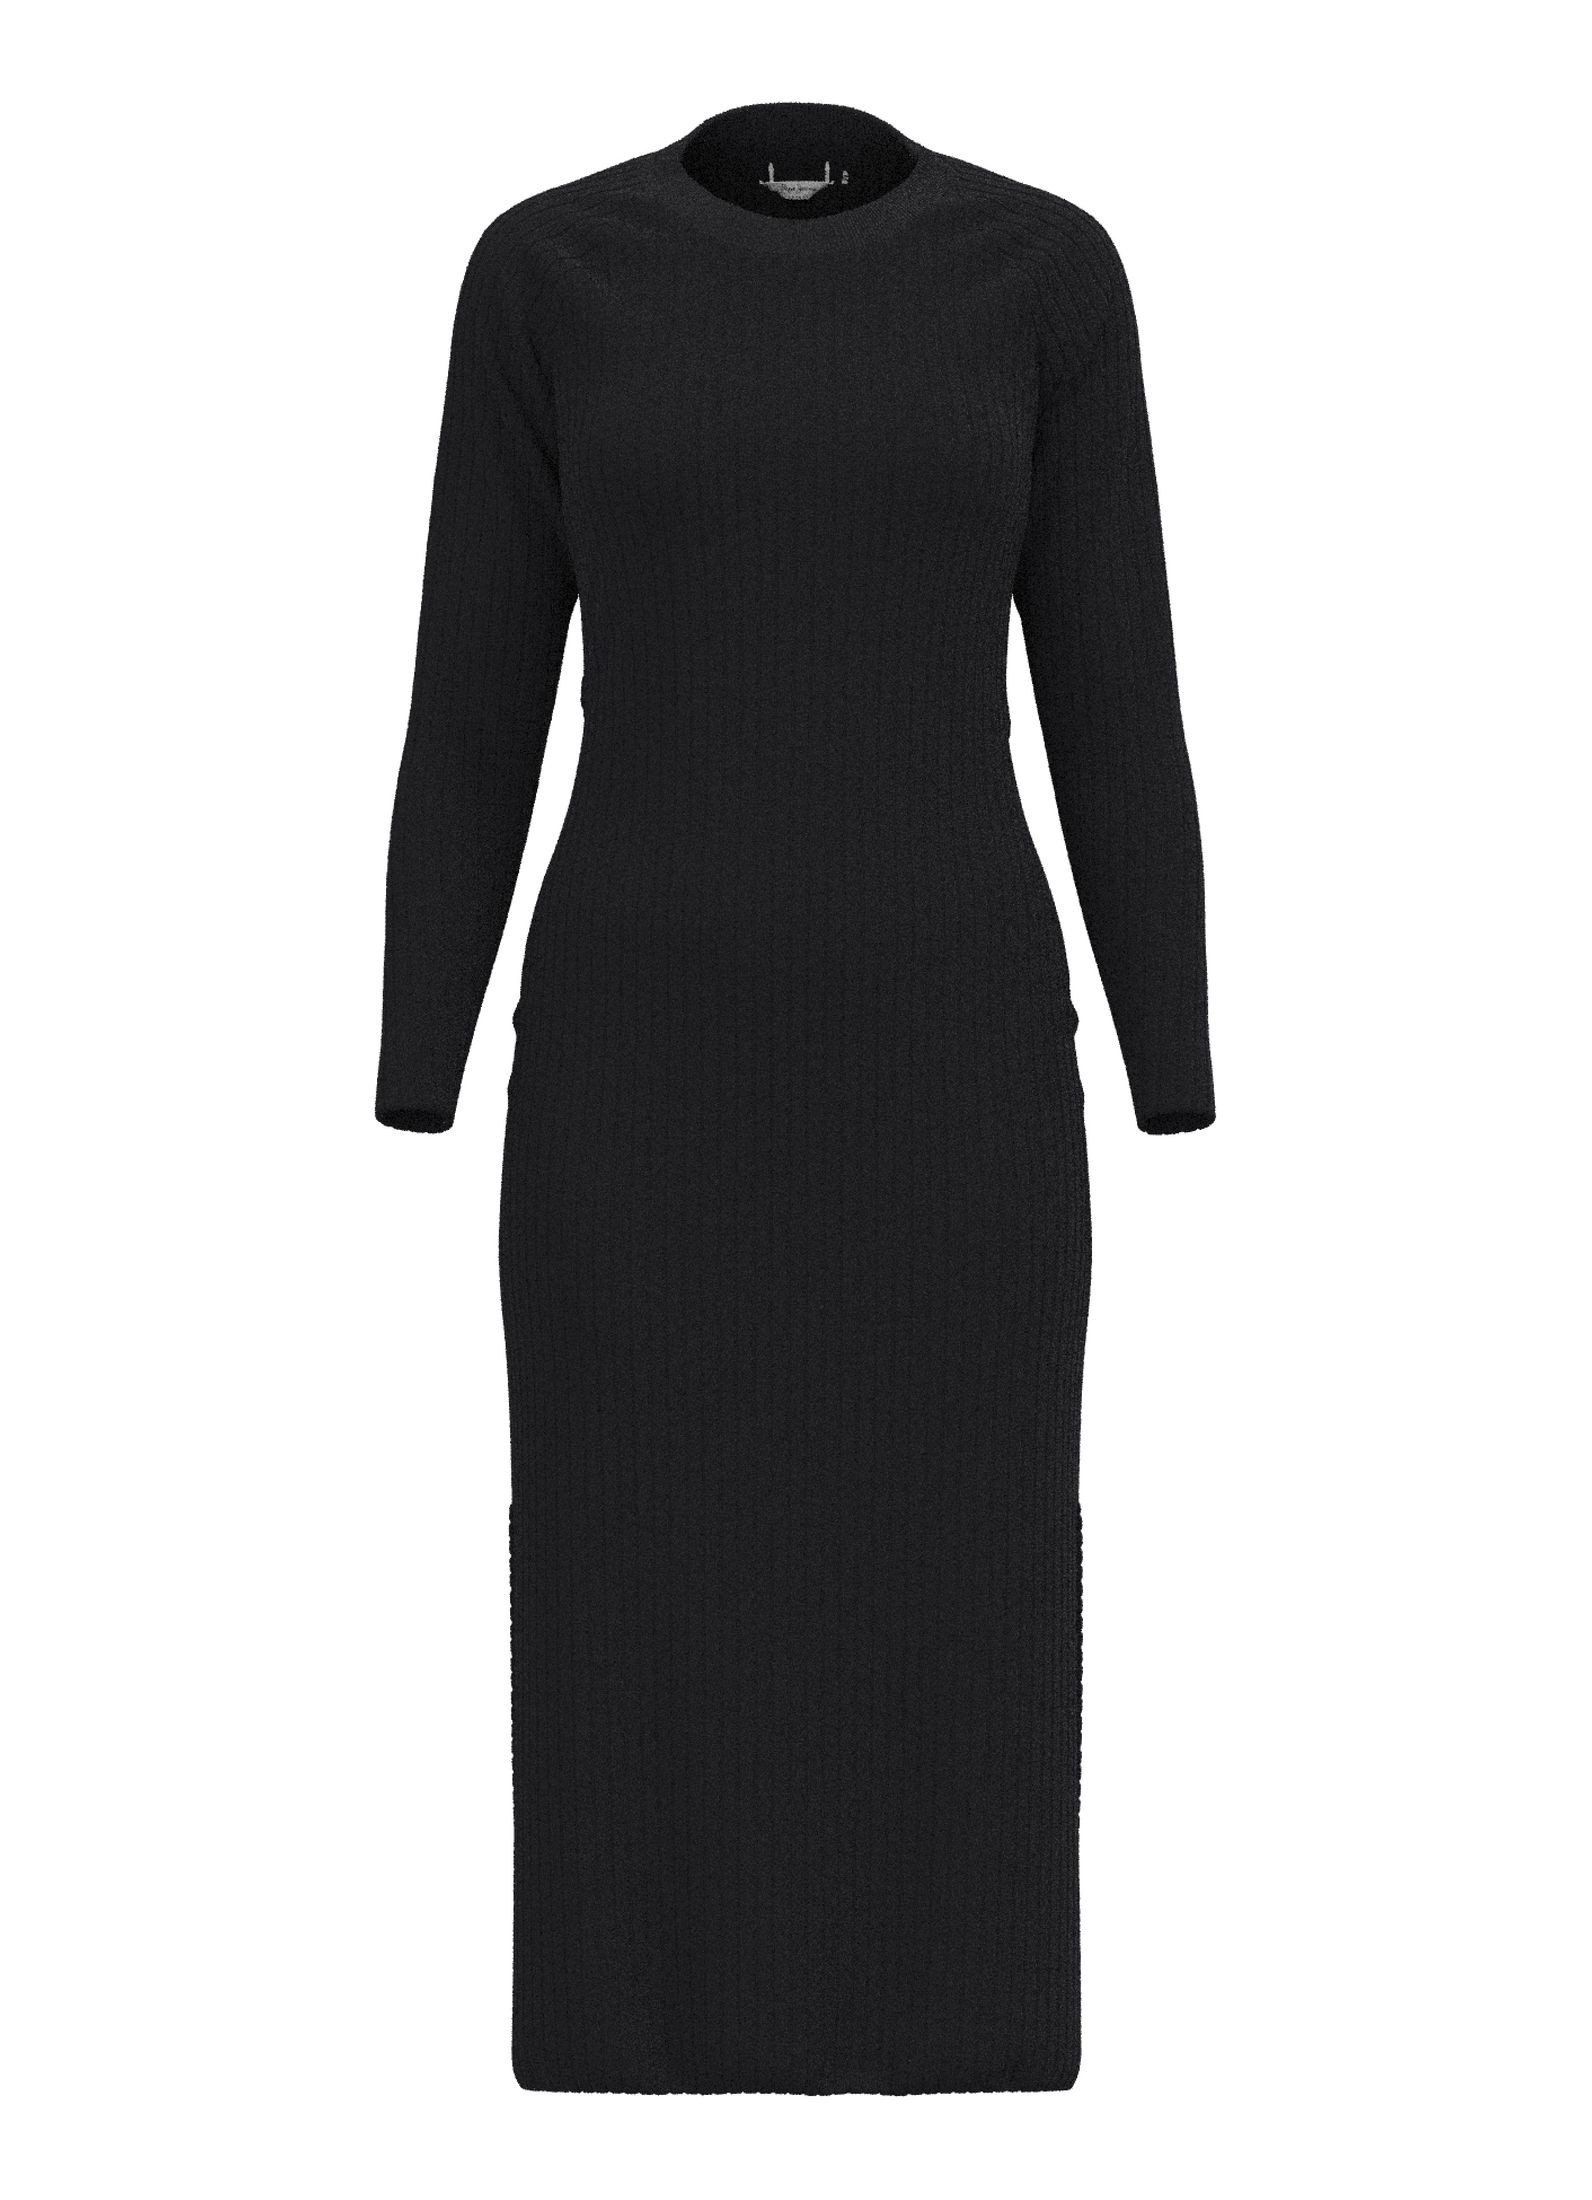 Knitted dress, Black, large image number 0